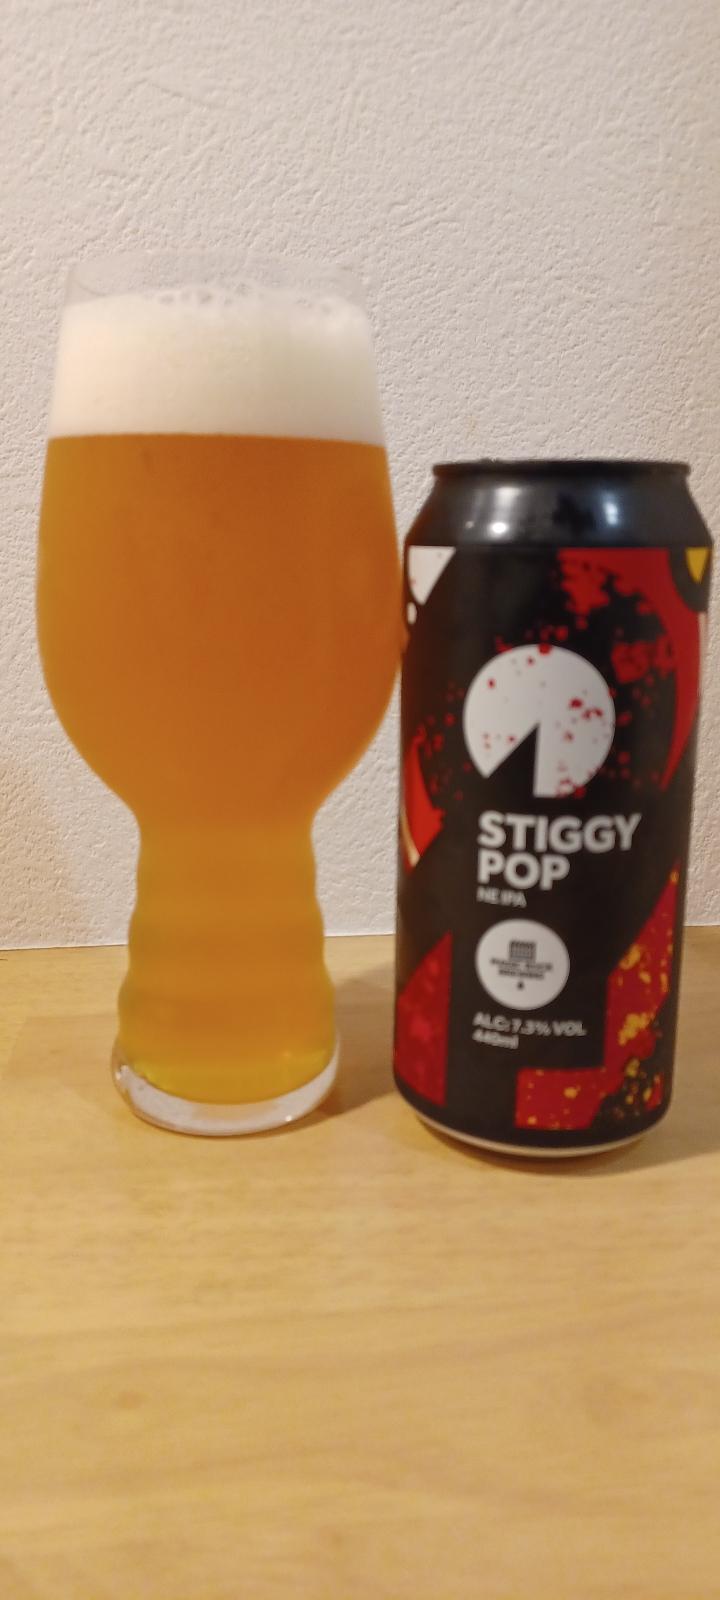 Stiggy Pop